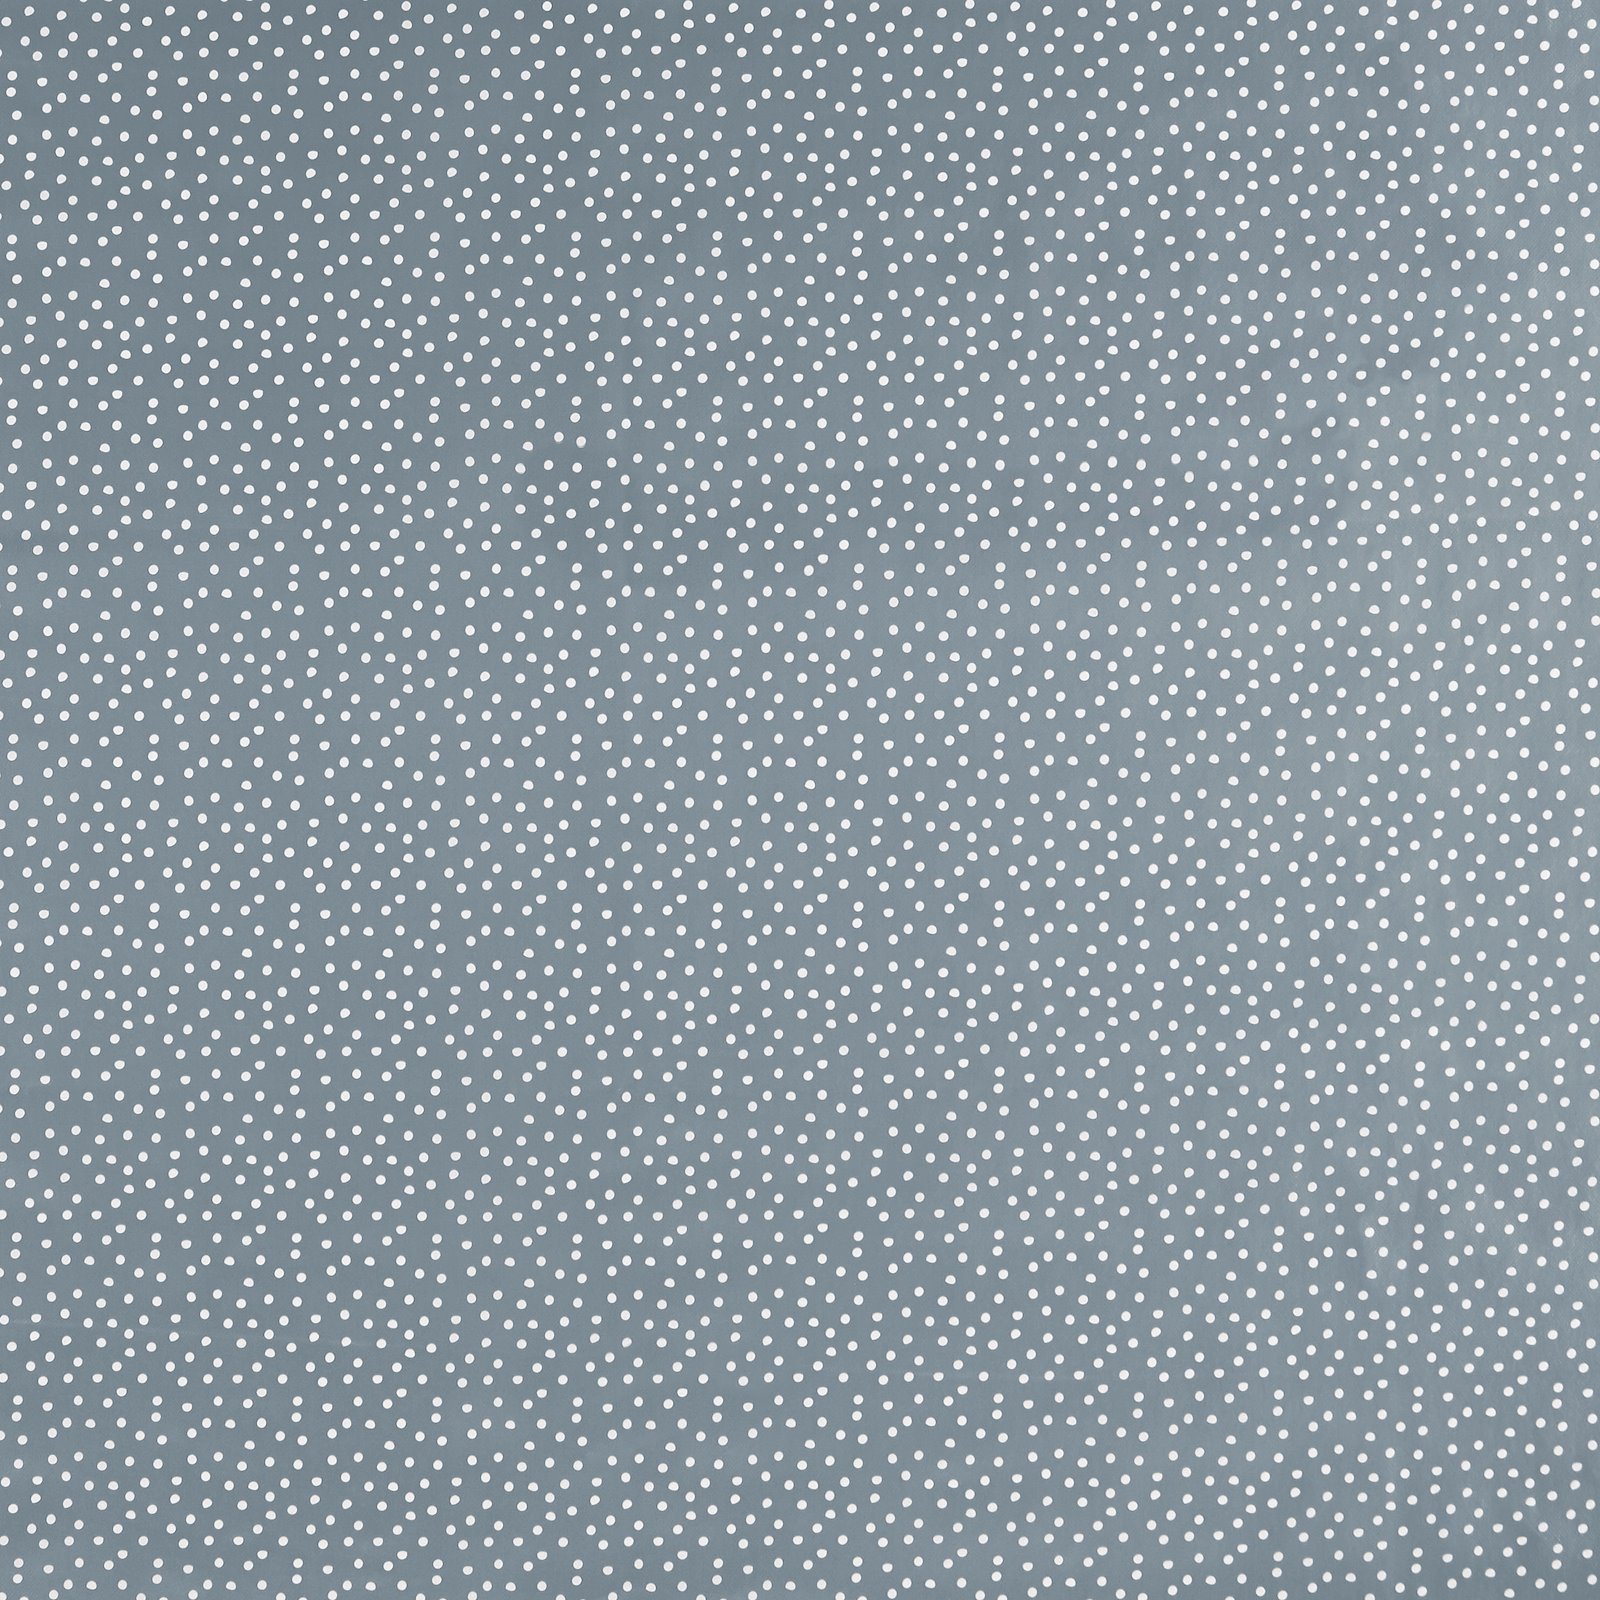 Non-woven oilcloth l blue w white dots 866116_pack_sp